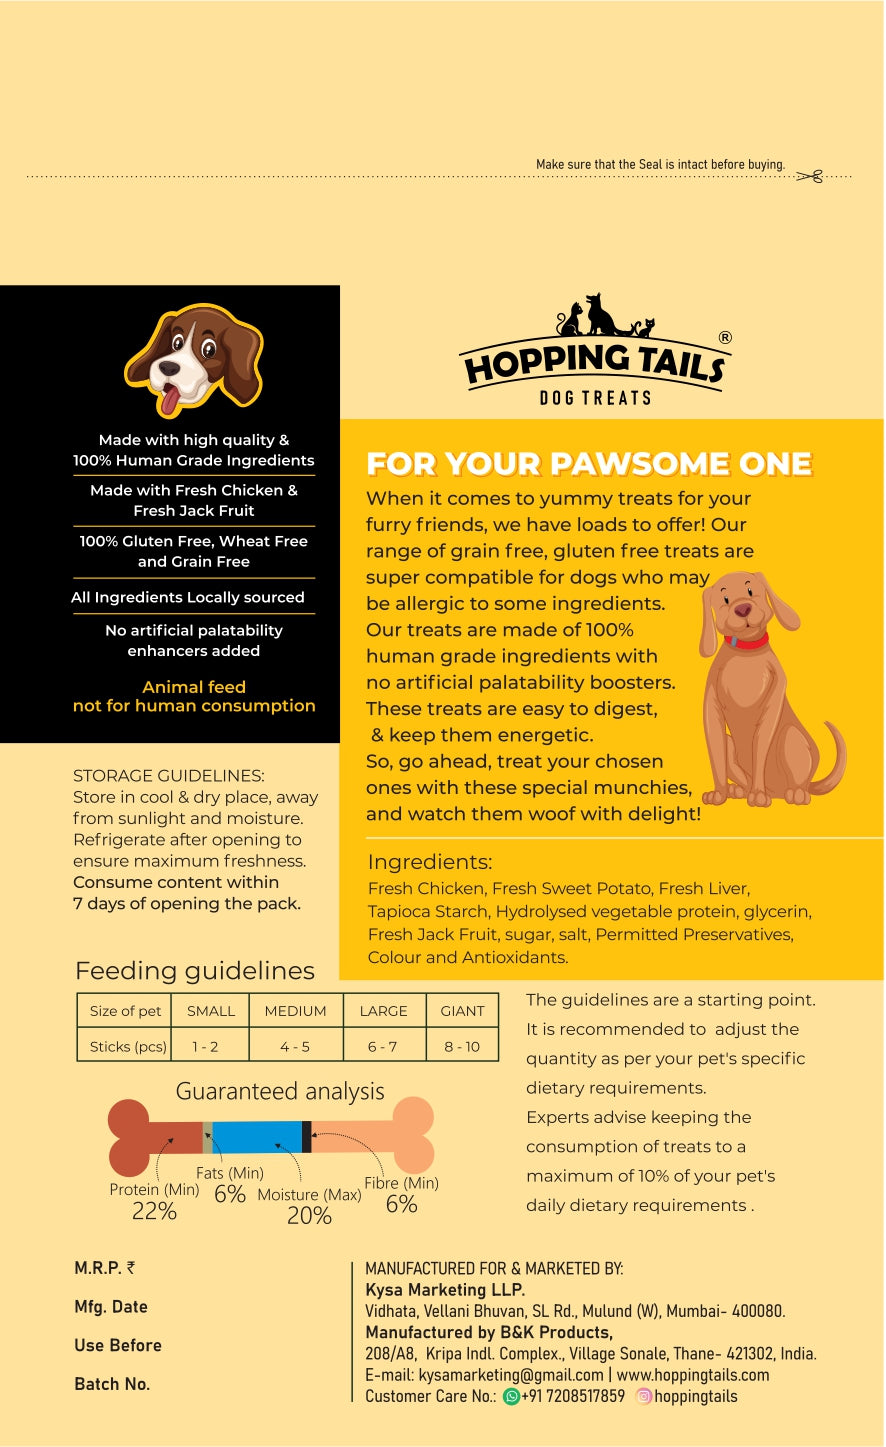 HOPPING TAILS PREMIUM GRAINFREE/GLUTEN FREE DOG TREATS - JUMPIN JACKOS